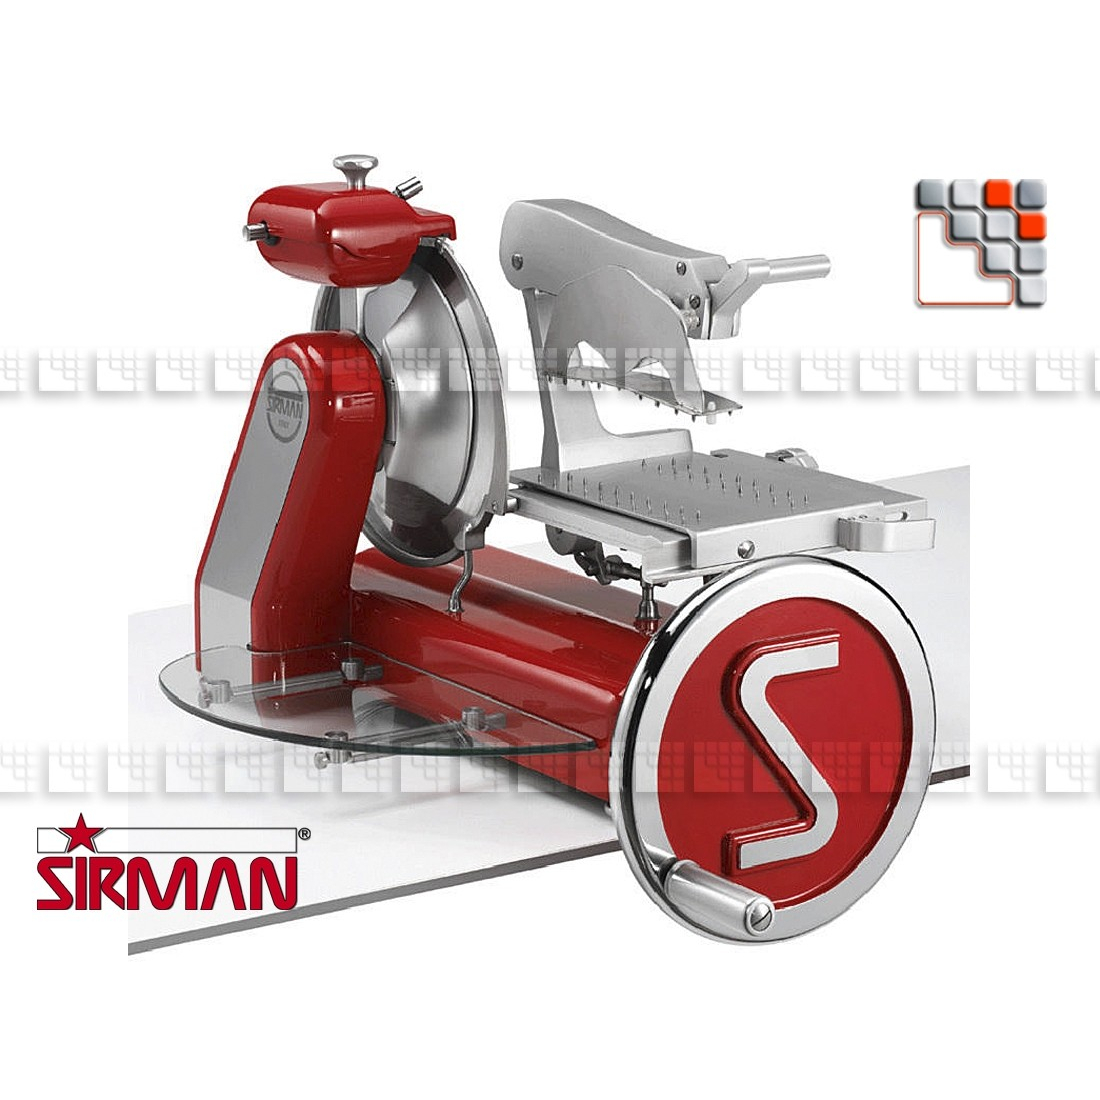 Slicer Anniversario LX 350 SIRMAN S31-LX350 SIRMAN® Manual Slicers BERKEL